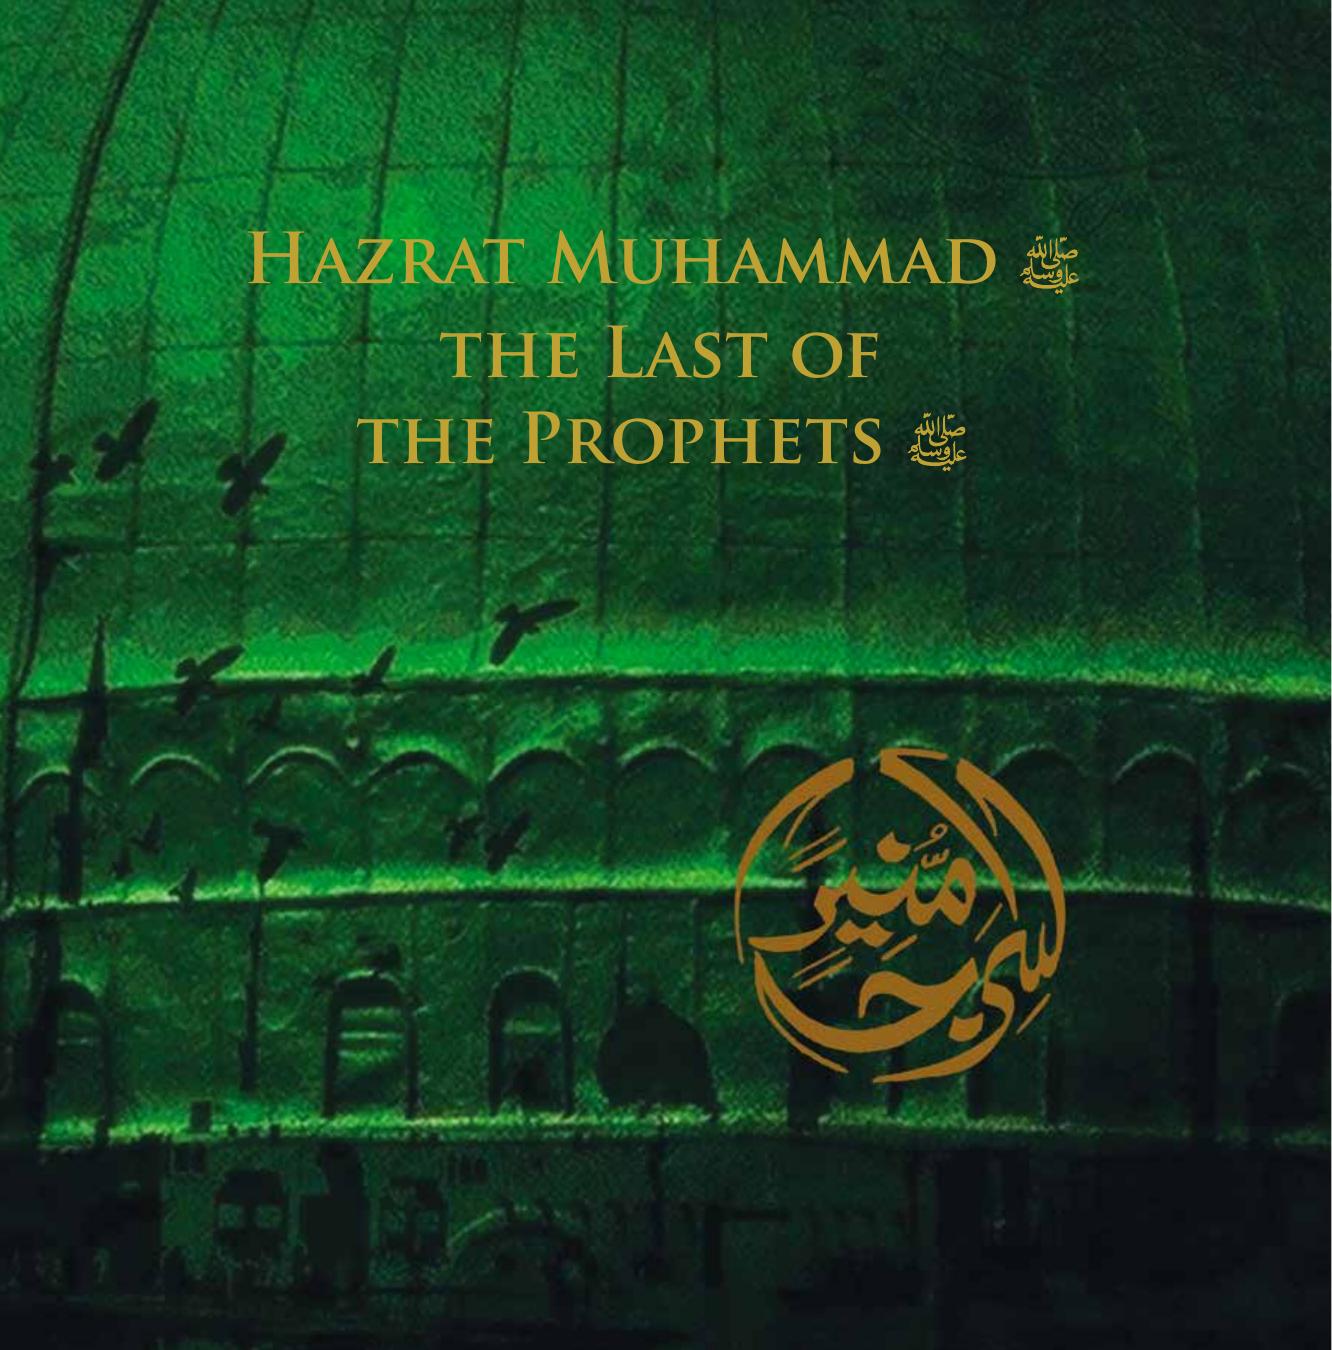 Hazrat Muhammad the Last of the Prophets, 2014